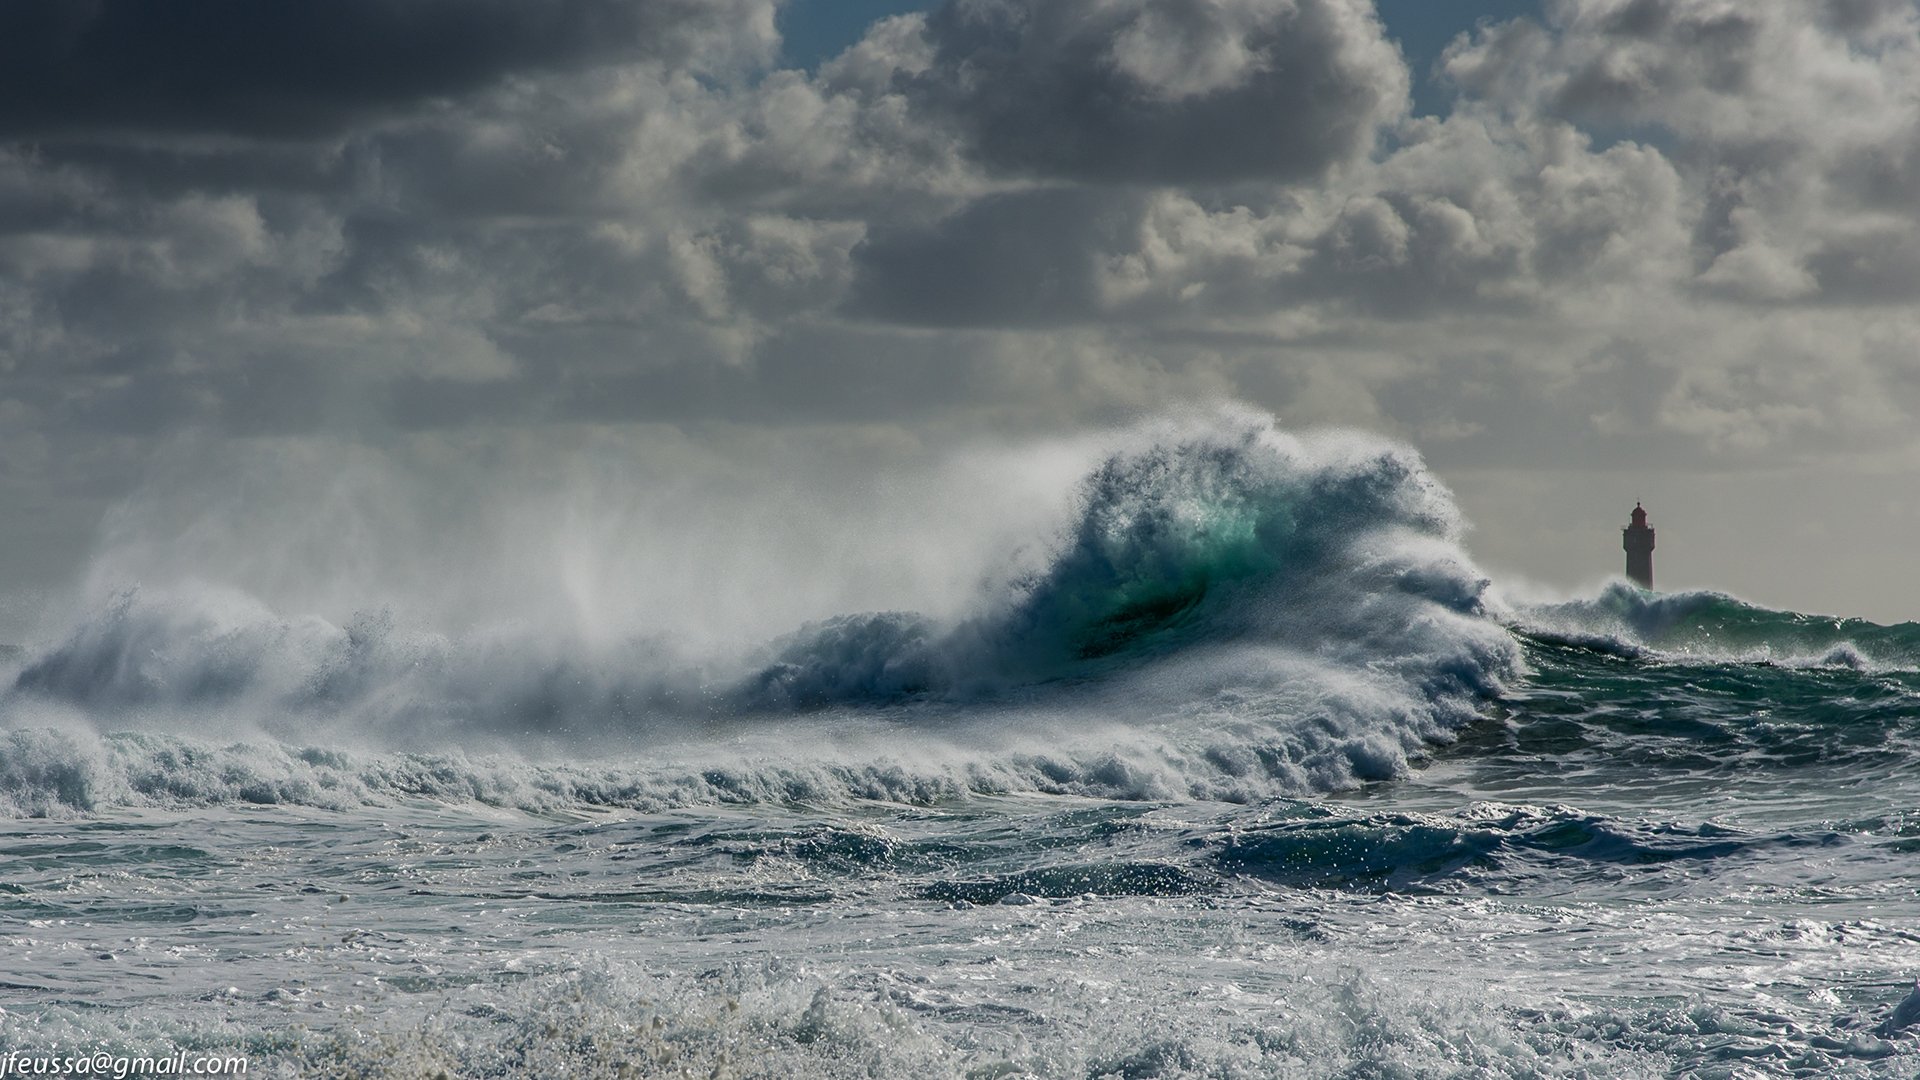 Ocean Waves In Storm Hd Wallpaper Background Image